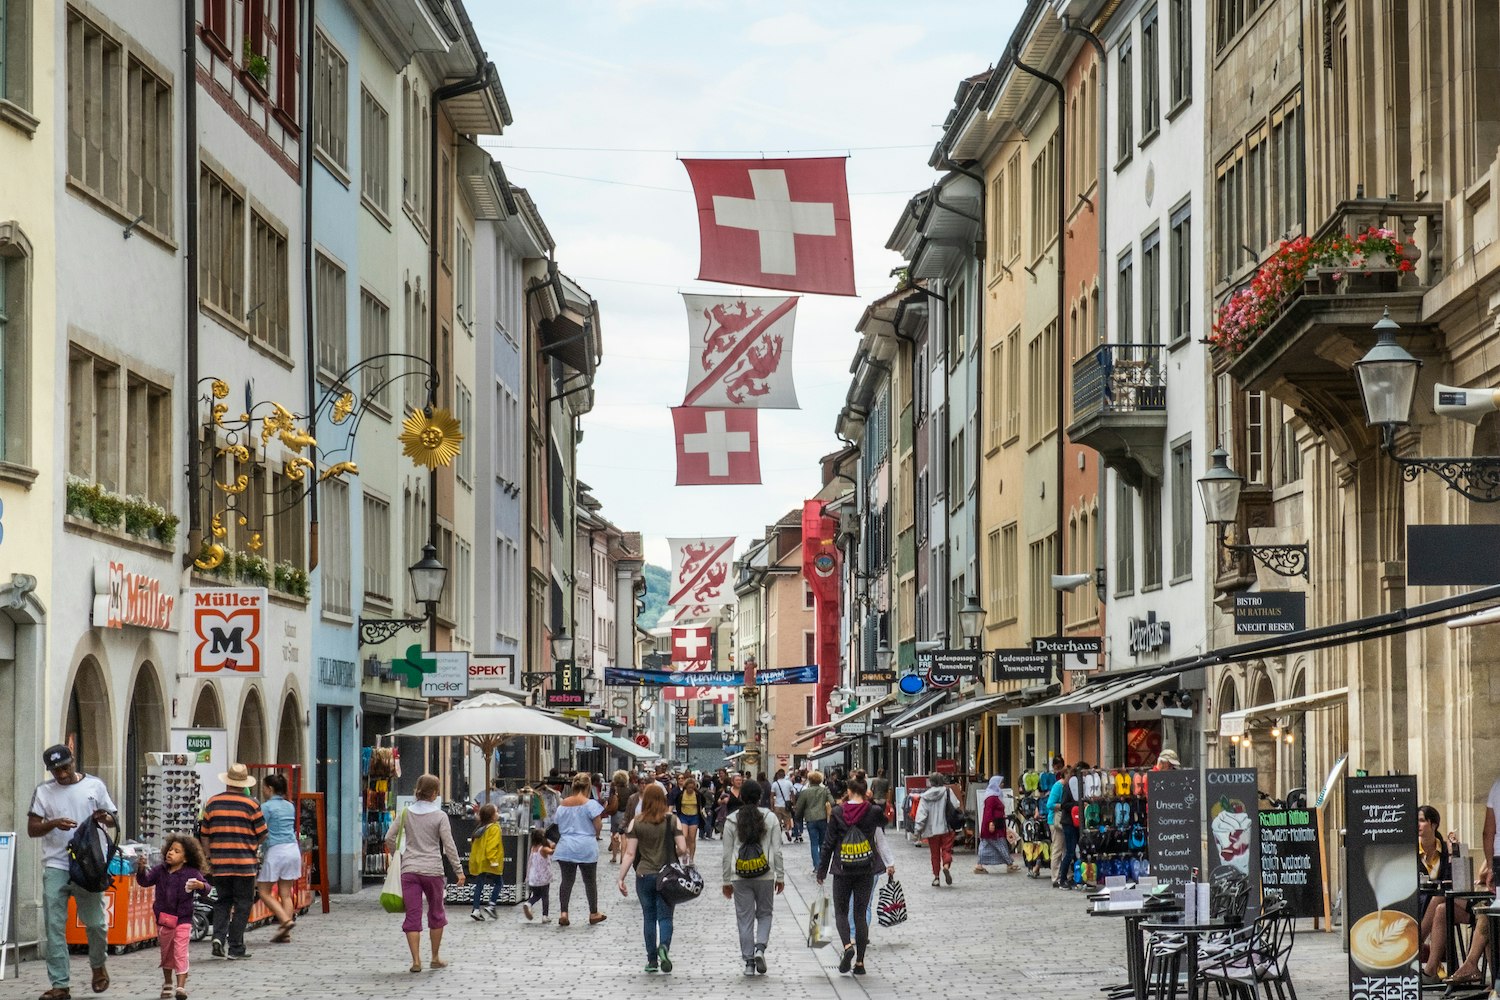 Under Swiss flags, pedestrians walk down busy Marktgasse toward the city center of Winterthur, Switzerland